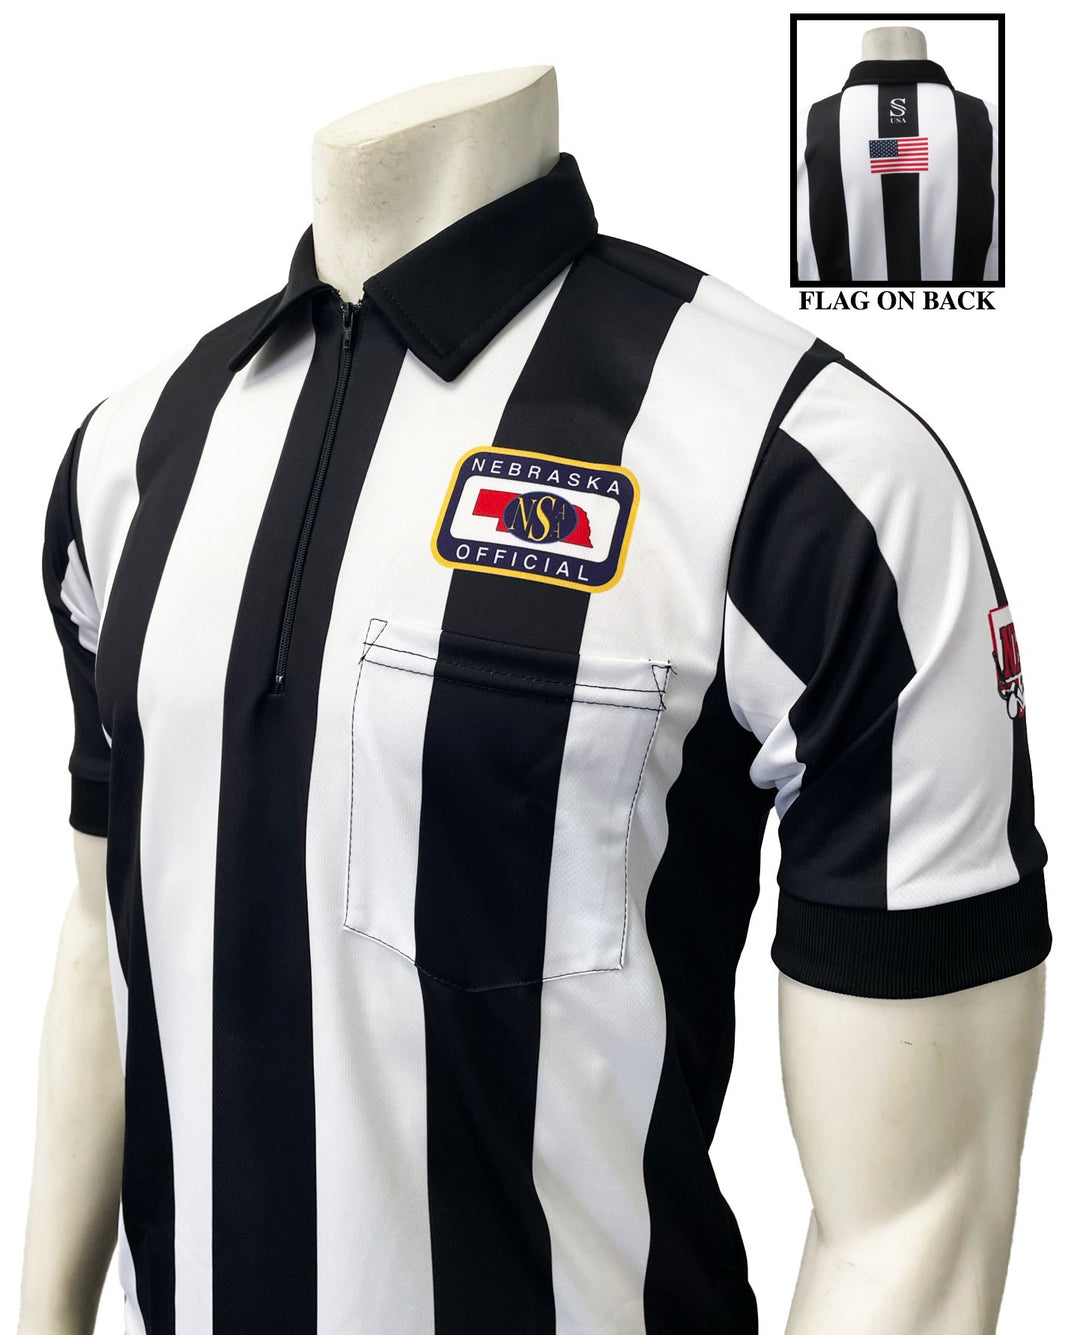 USA137NE-NHS-607 - Smitty "Made in USA" - Short Sleeve "BODY FLEX" Football Shirt